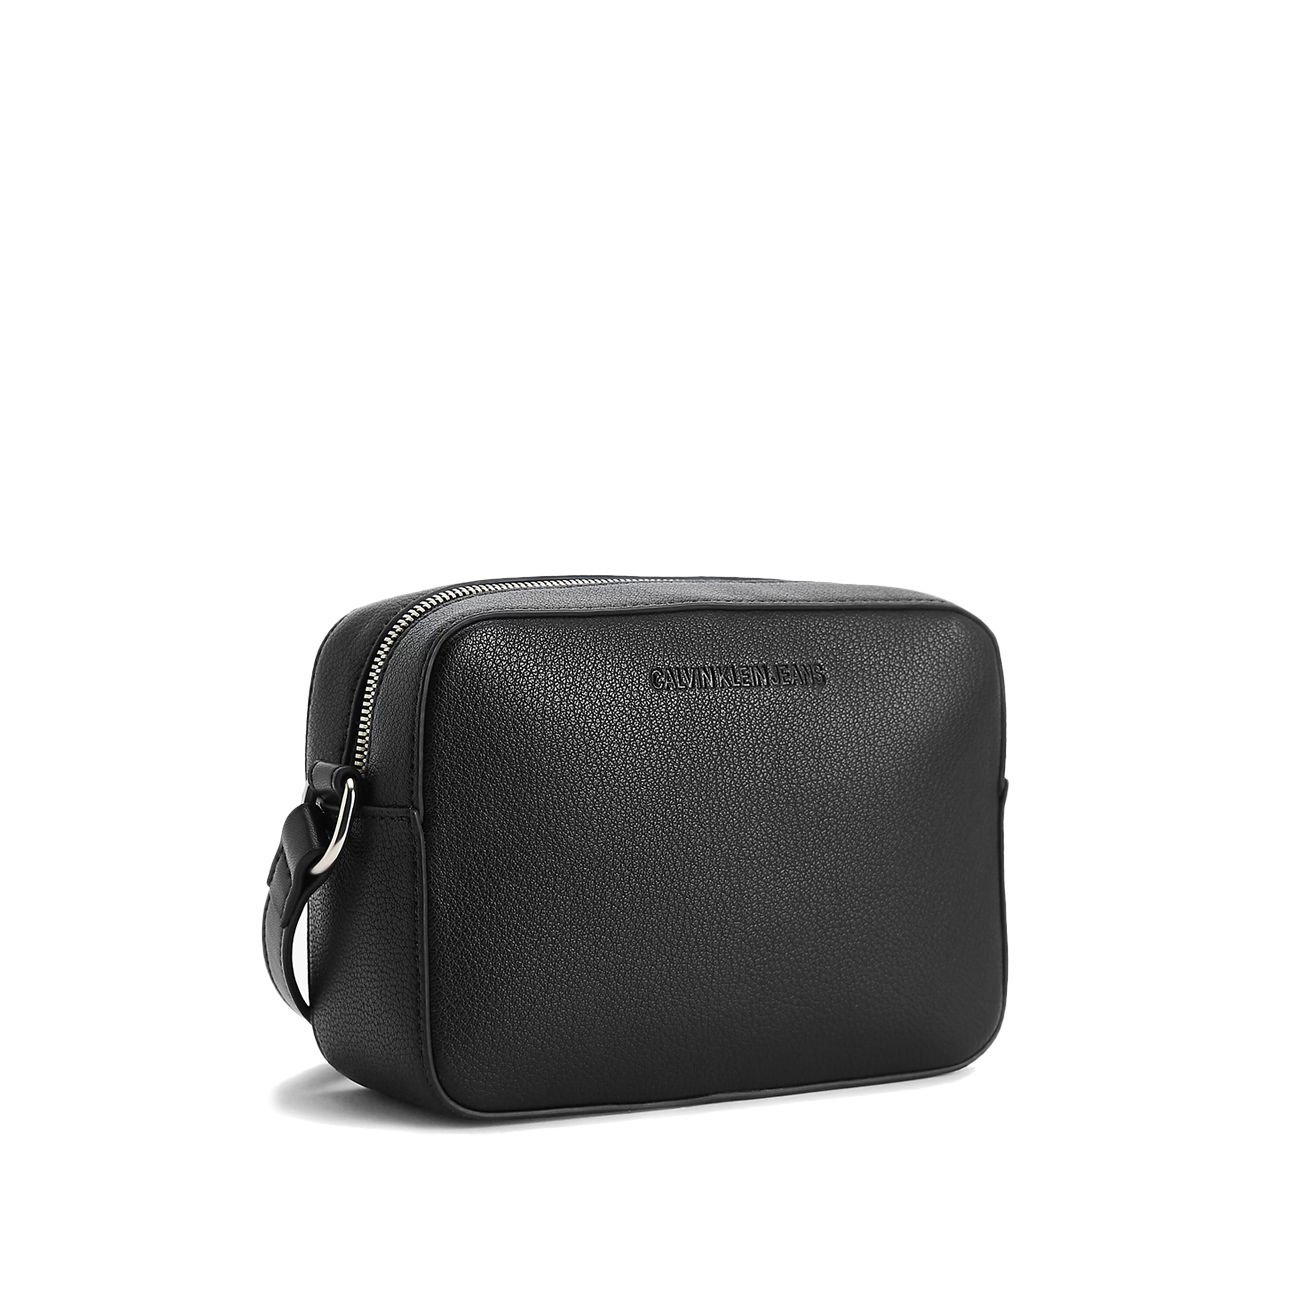 Calvin Klein Modern Essentials Organizational Bucket, Black: Handbags:  Amazon.com